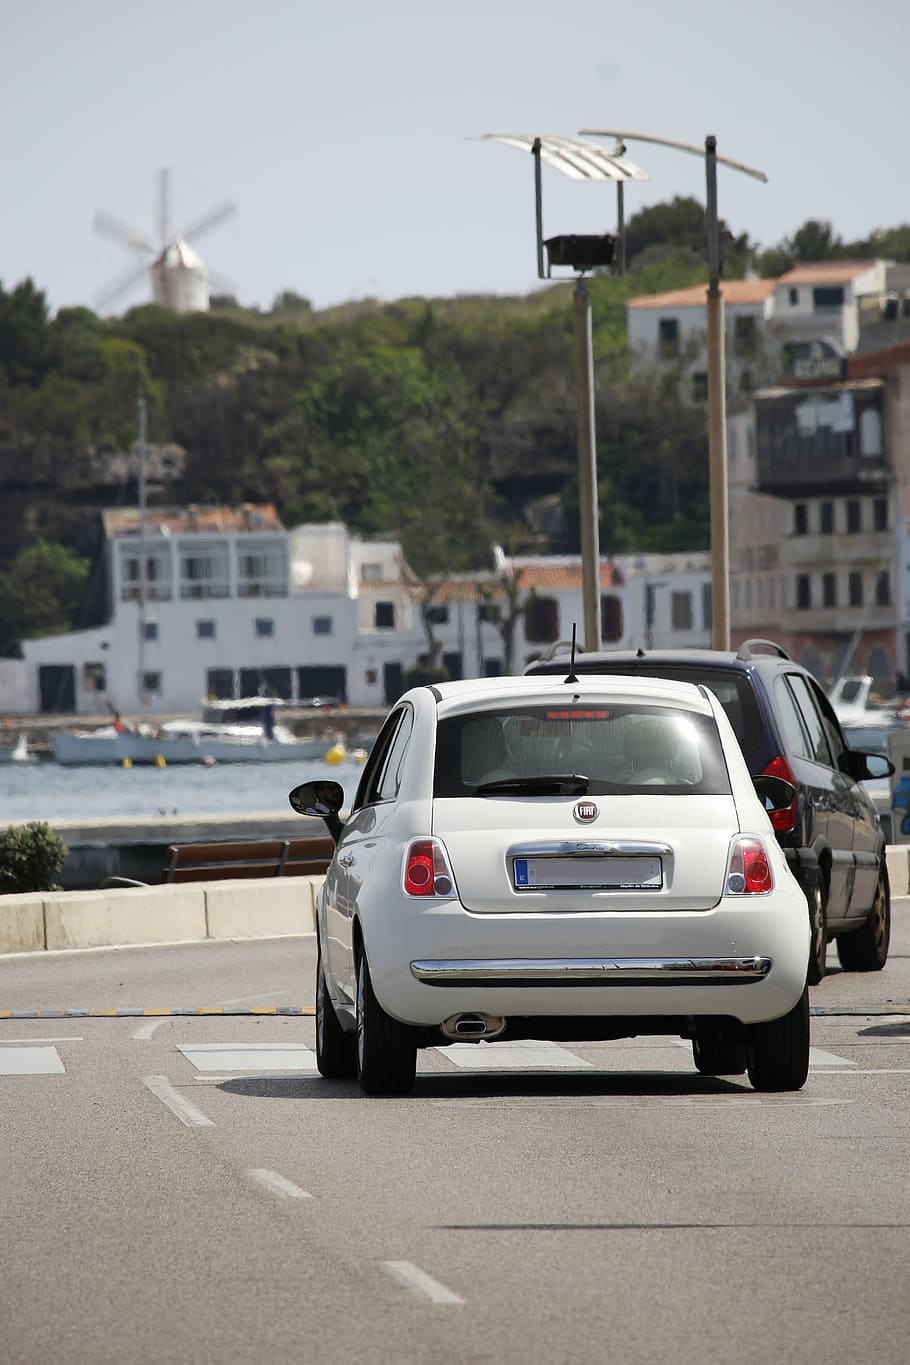 Fiat 500, Mahon, Menorca, places of interest, port rovereto, mao, beach promenade, car, transportation, street